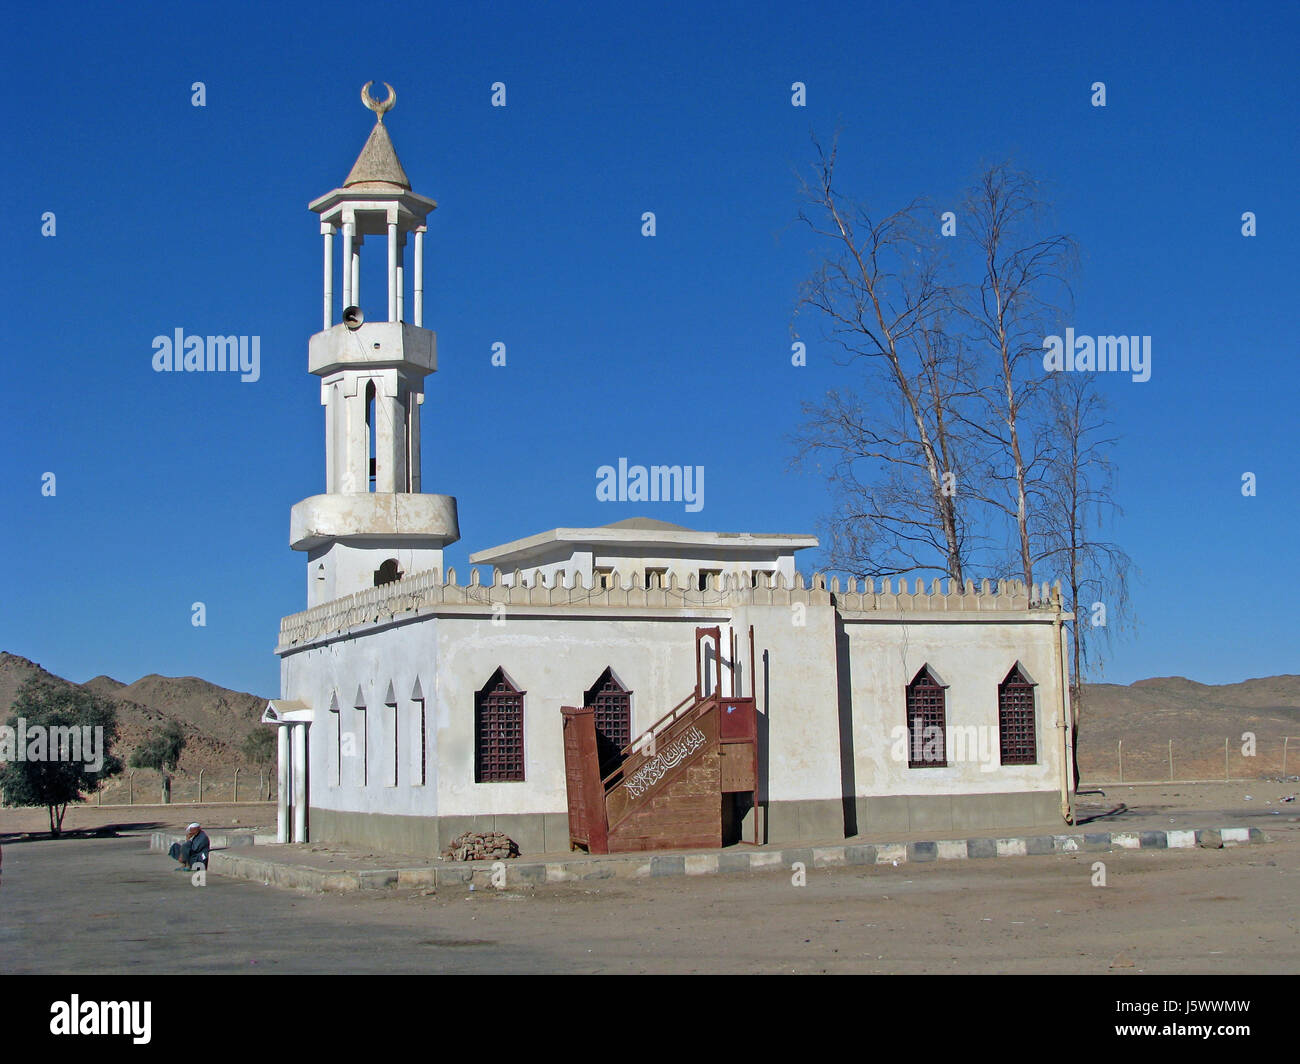 egypt church islam mosque beadhouse allah desert wasteland egypt church style Stock Photo